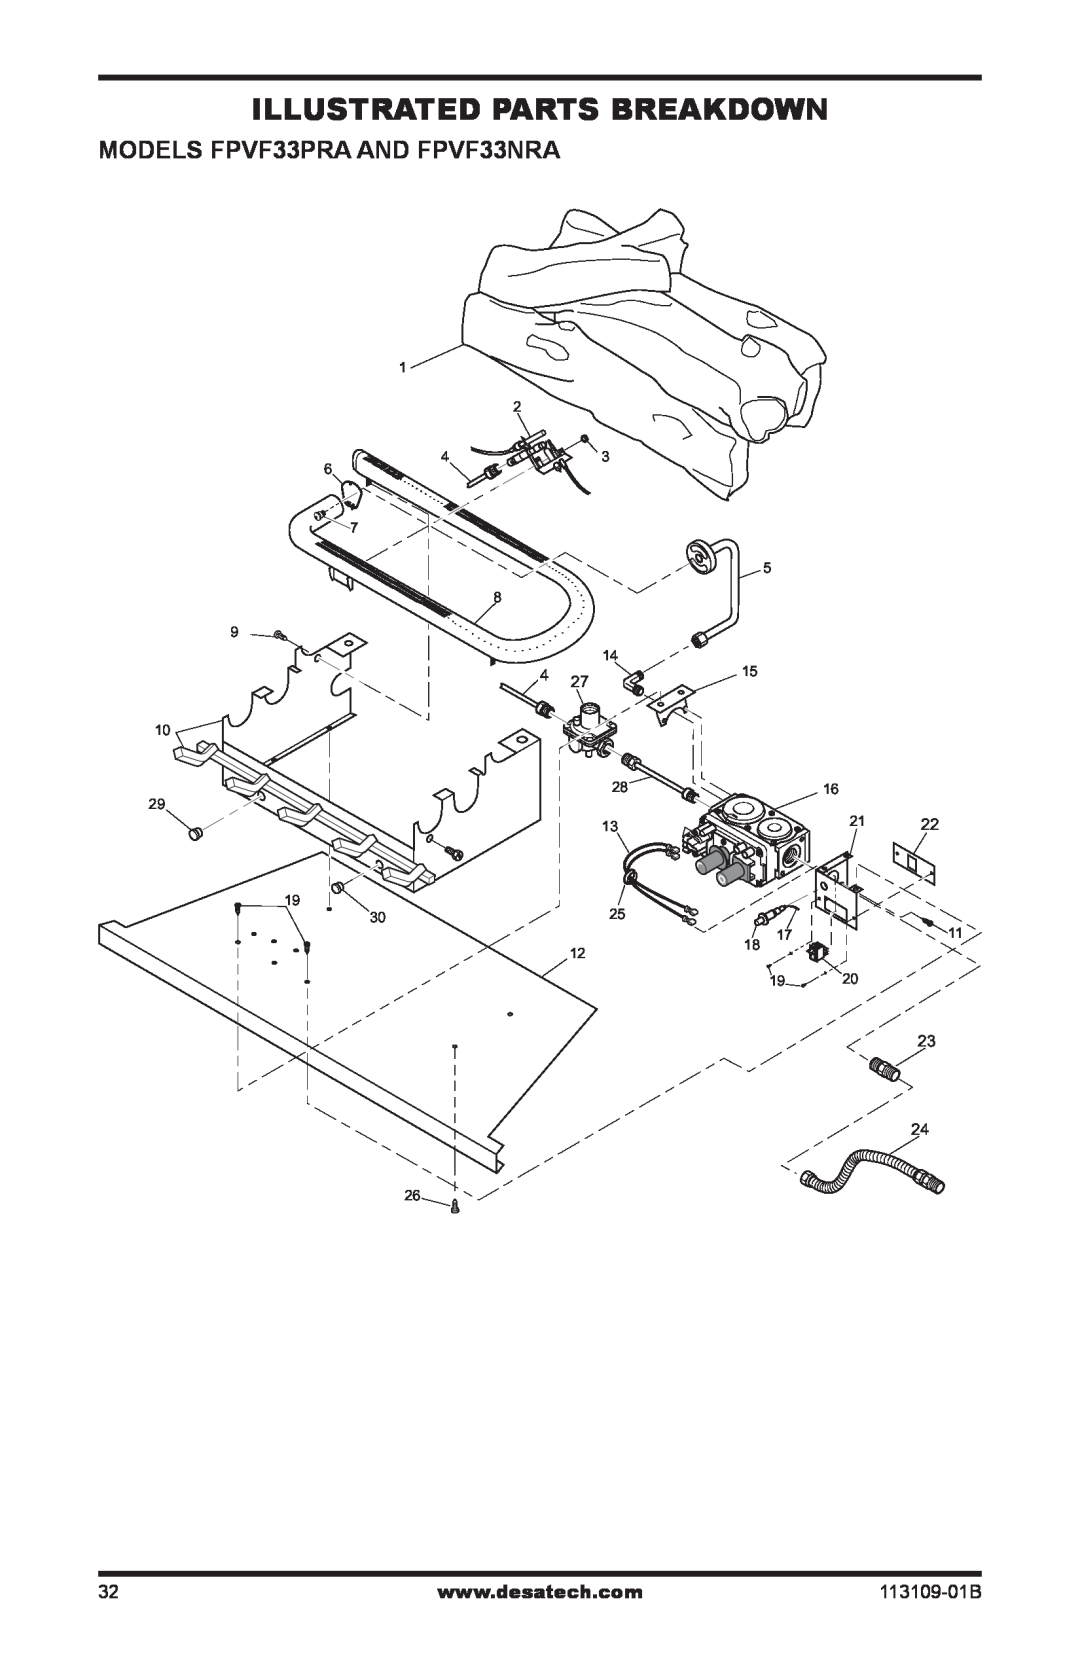 Desa VYGF33PRC installation manual Illustrated Parts Breakdown, MODELS FPVF33PRA AND FPVF33NRA, 113109-01B 